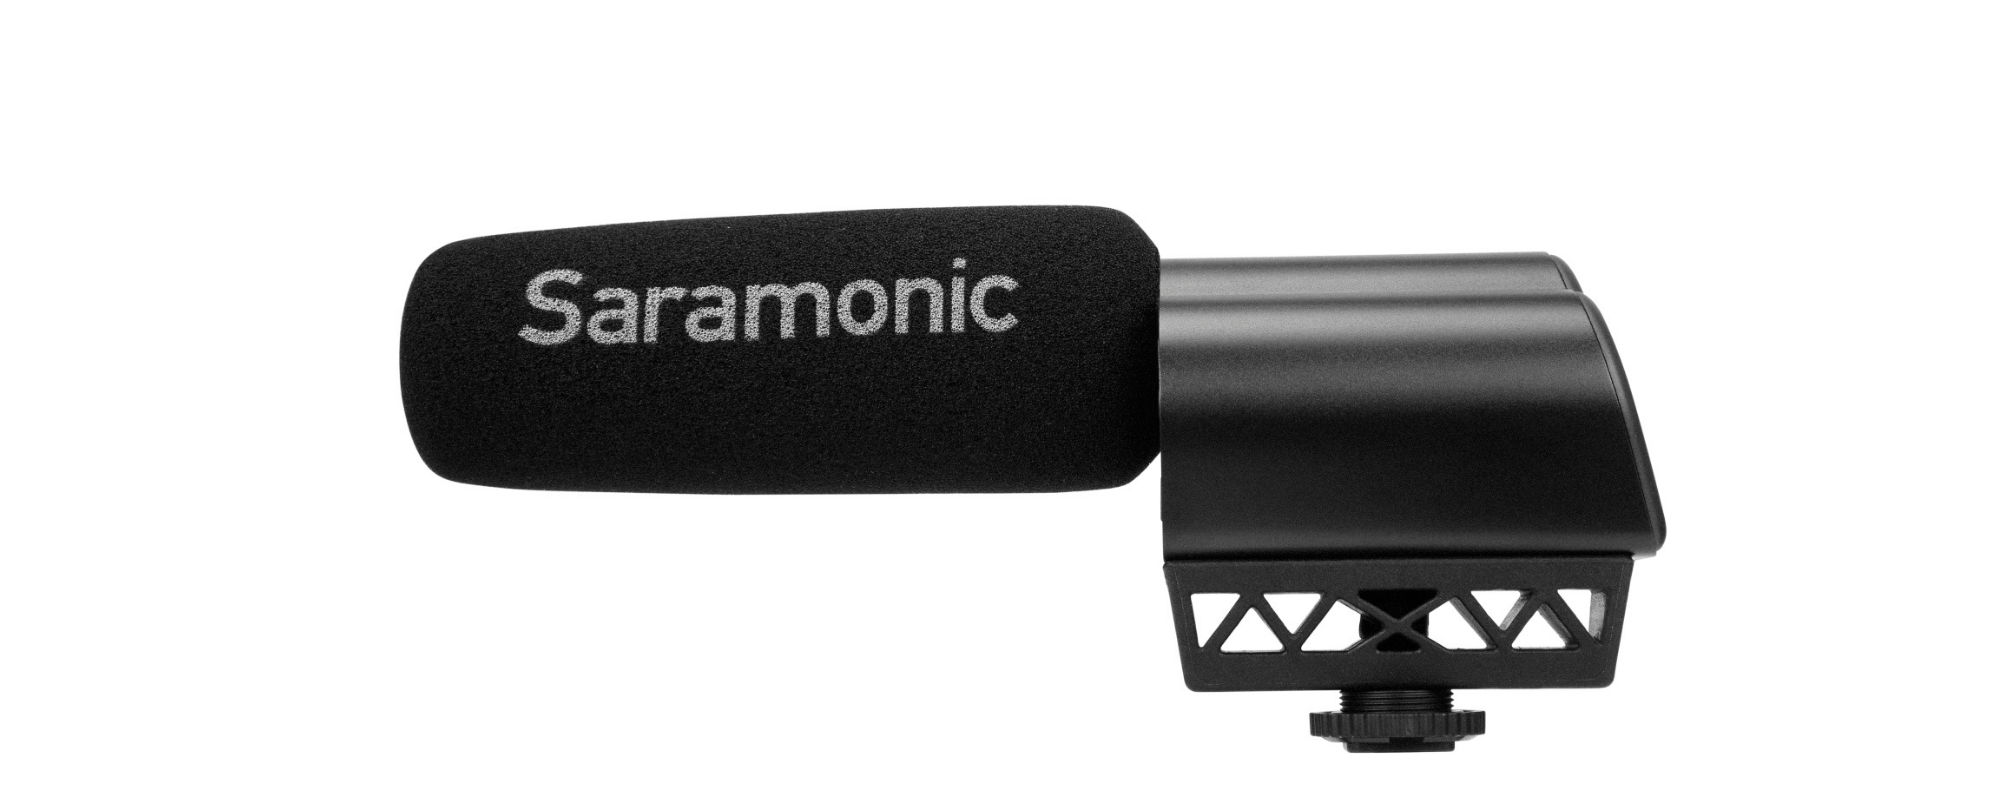 Saramonic Vmic Pro Mark II Kondensatormikrofon für Kameras und Camcorder